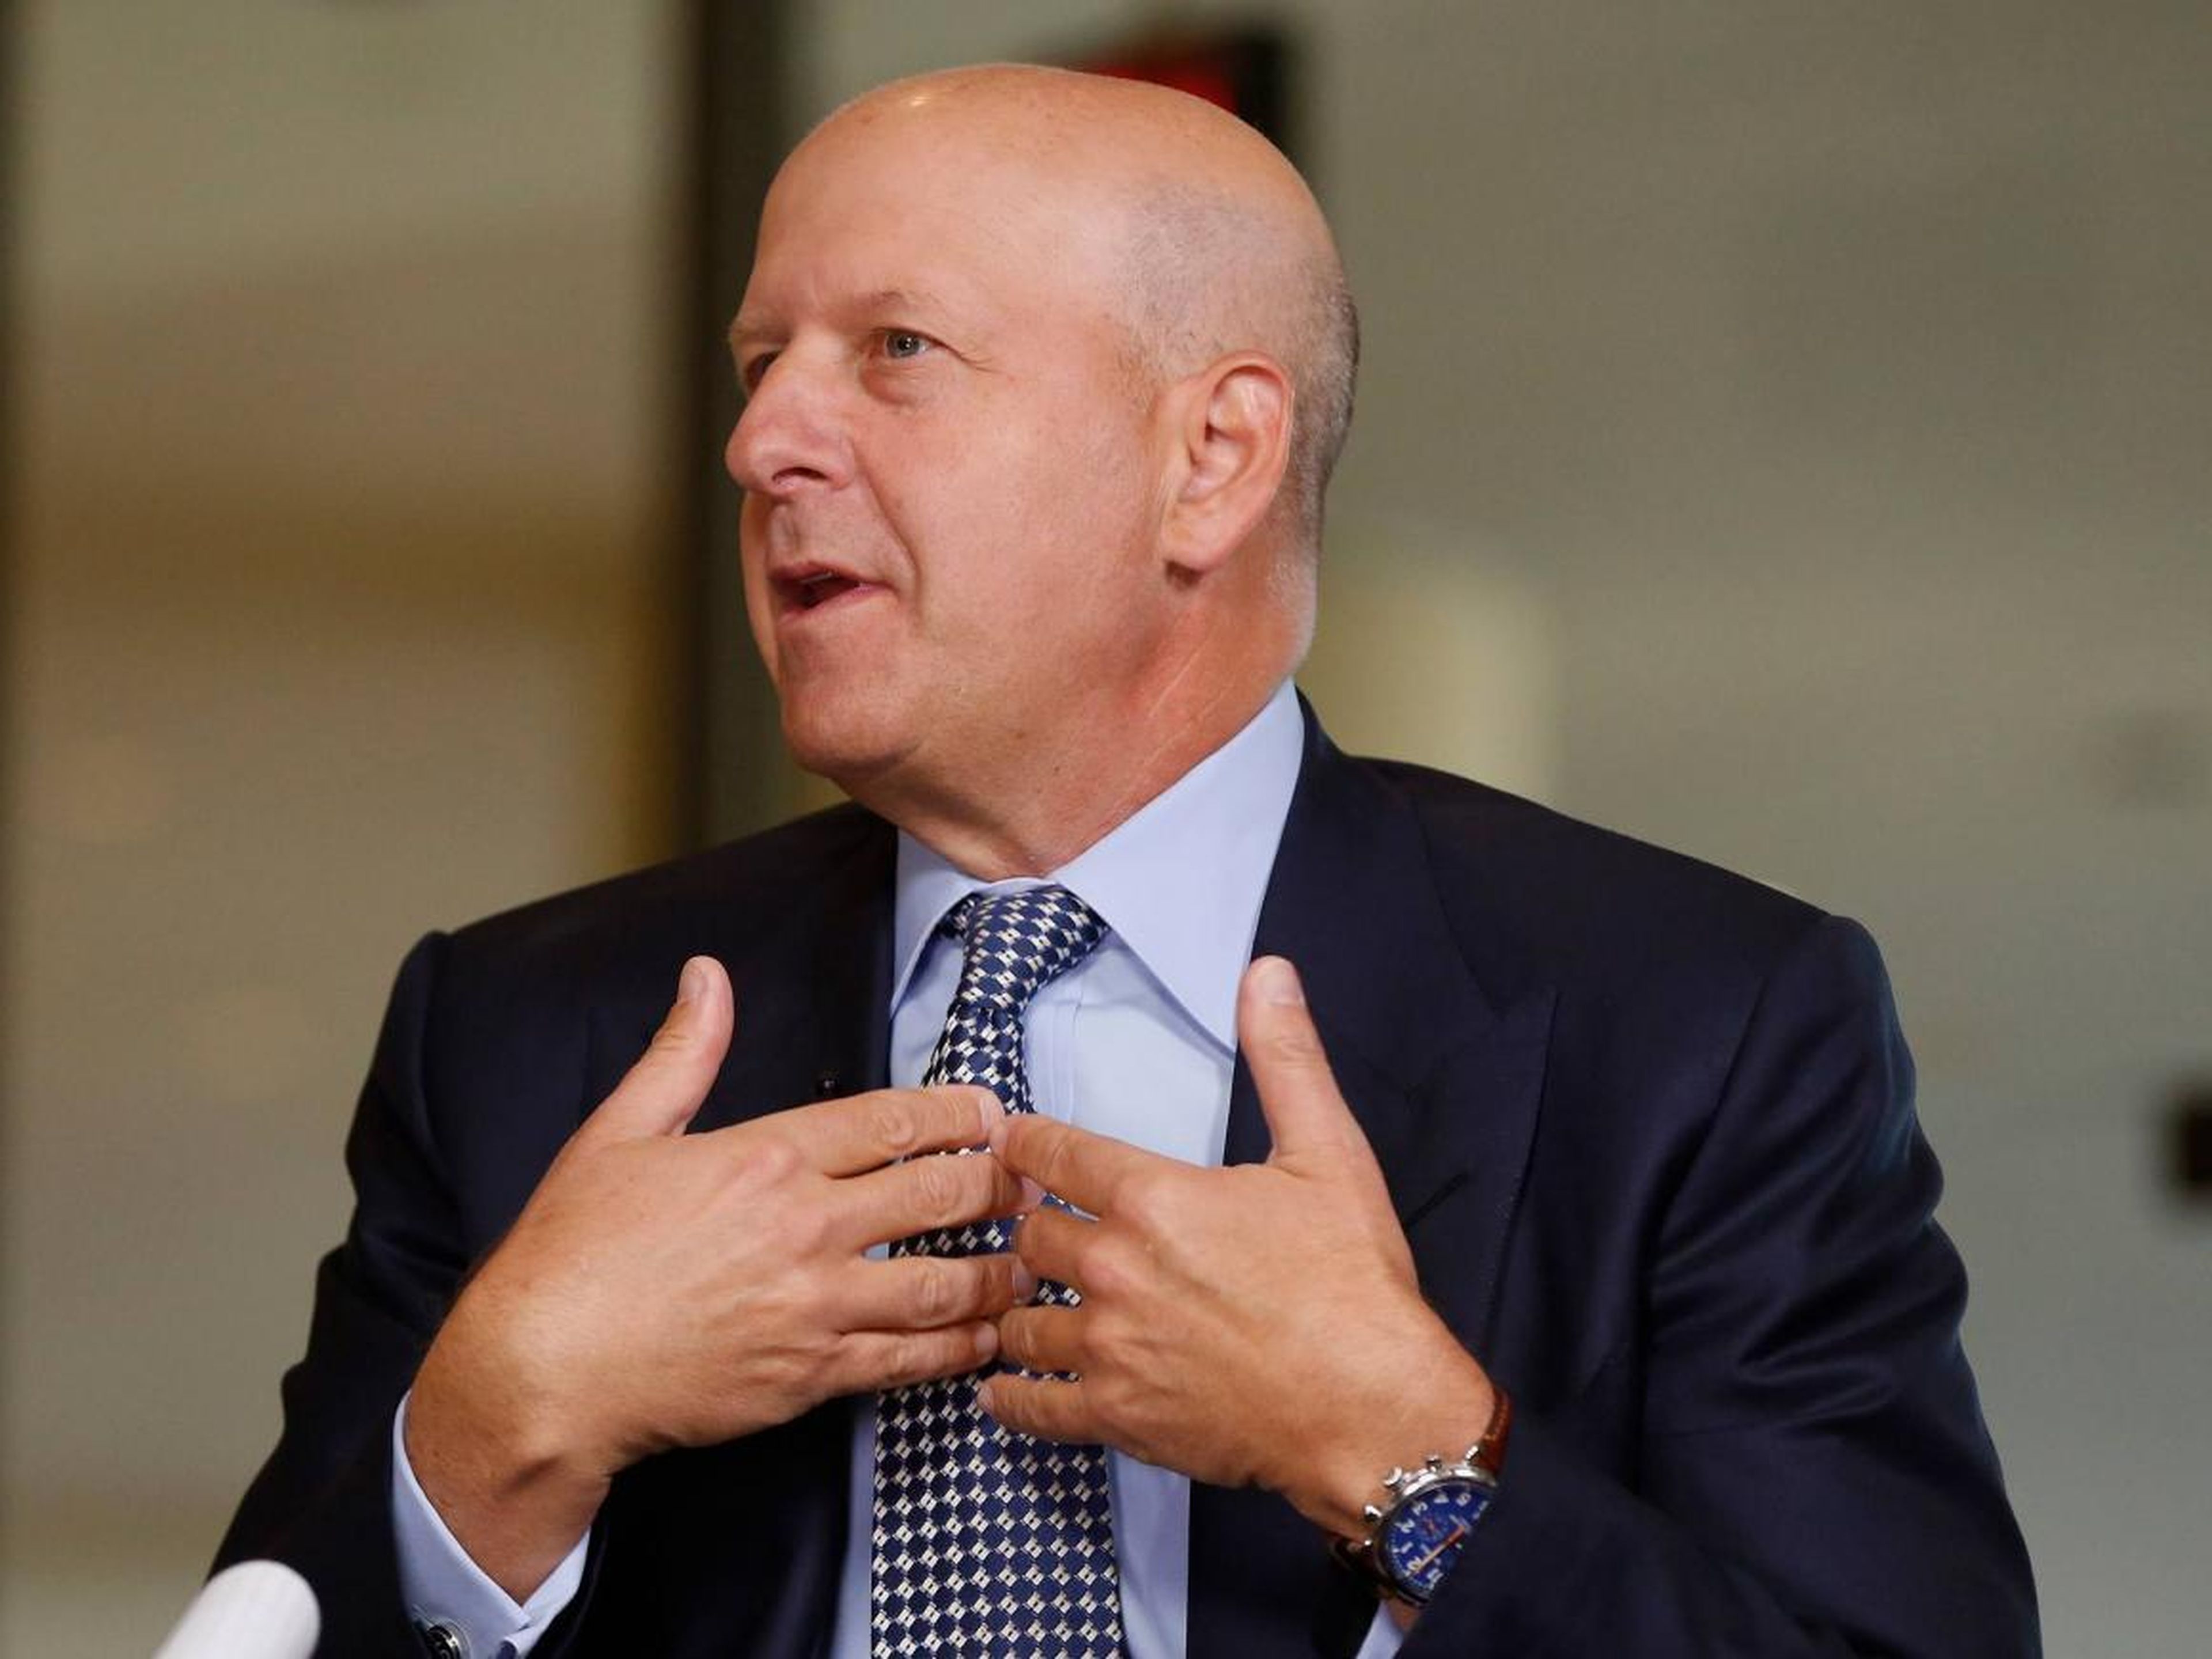 Goldman Sachs announces major leadership shakeup as incoming CEO David Solomon picks his team